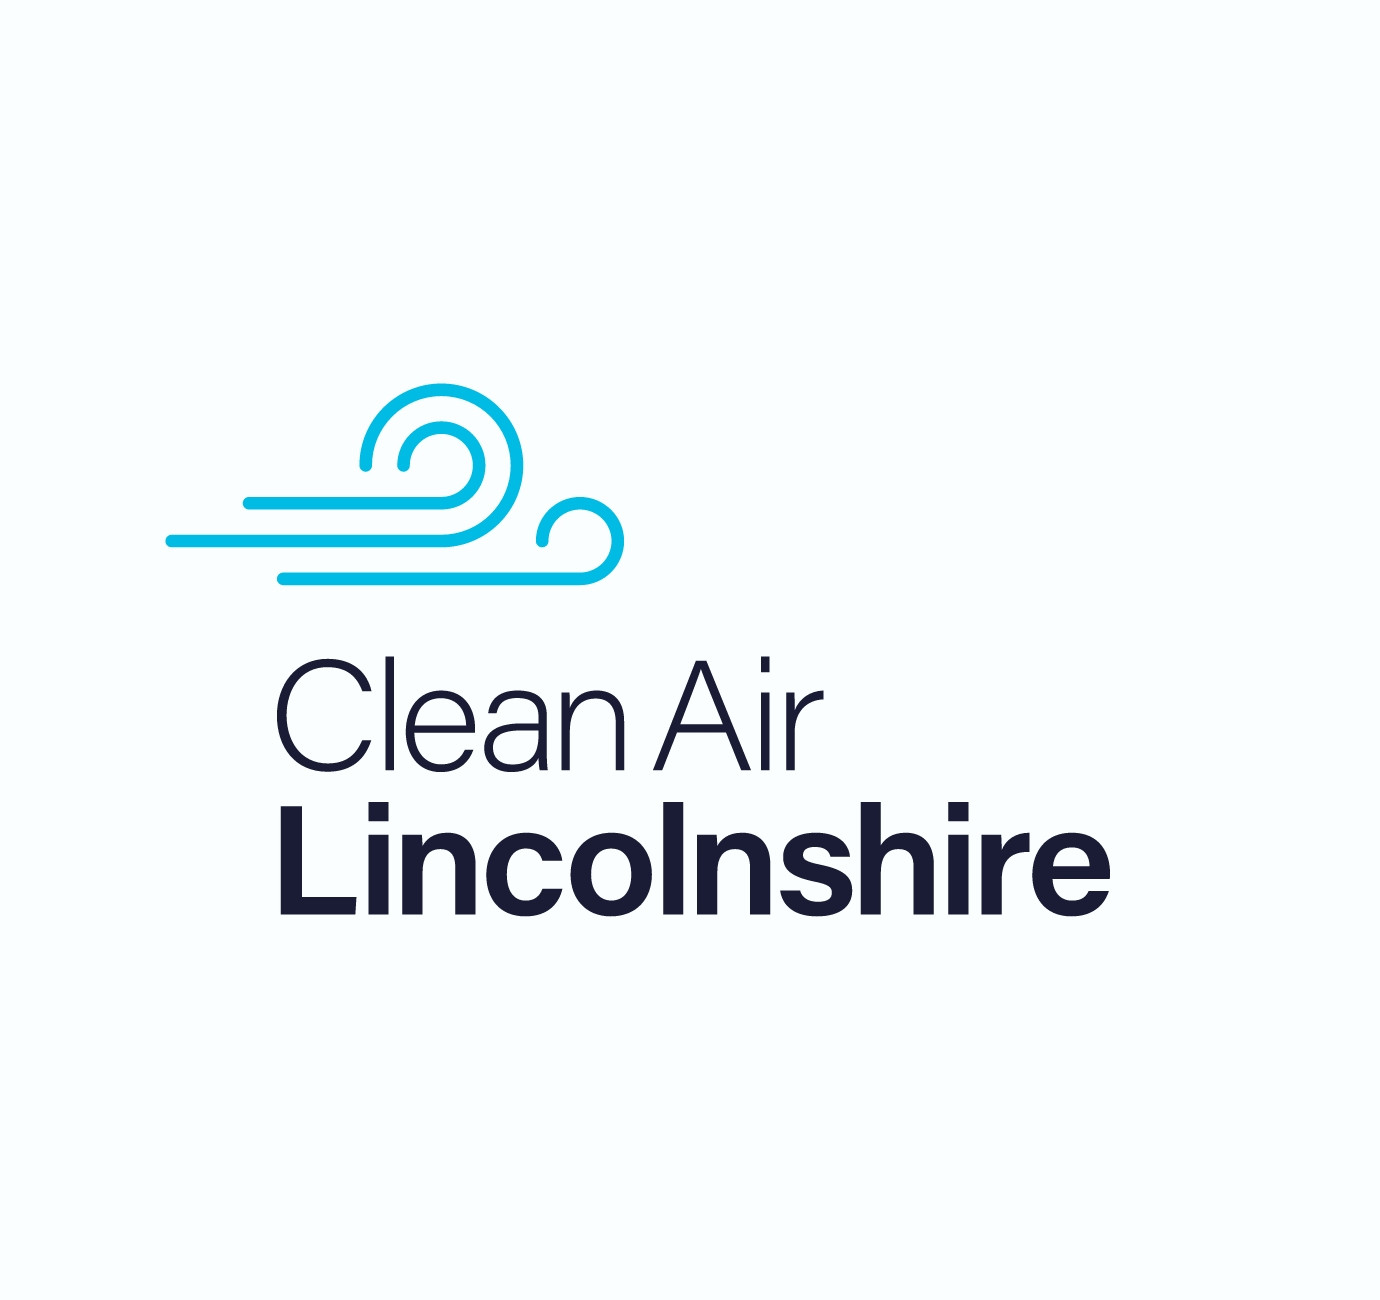 Clean Air Lincolnshire cloud logo design by Root Studio